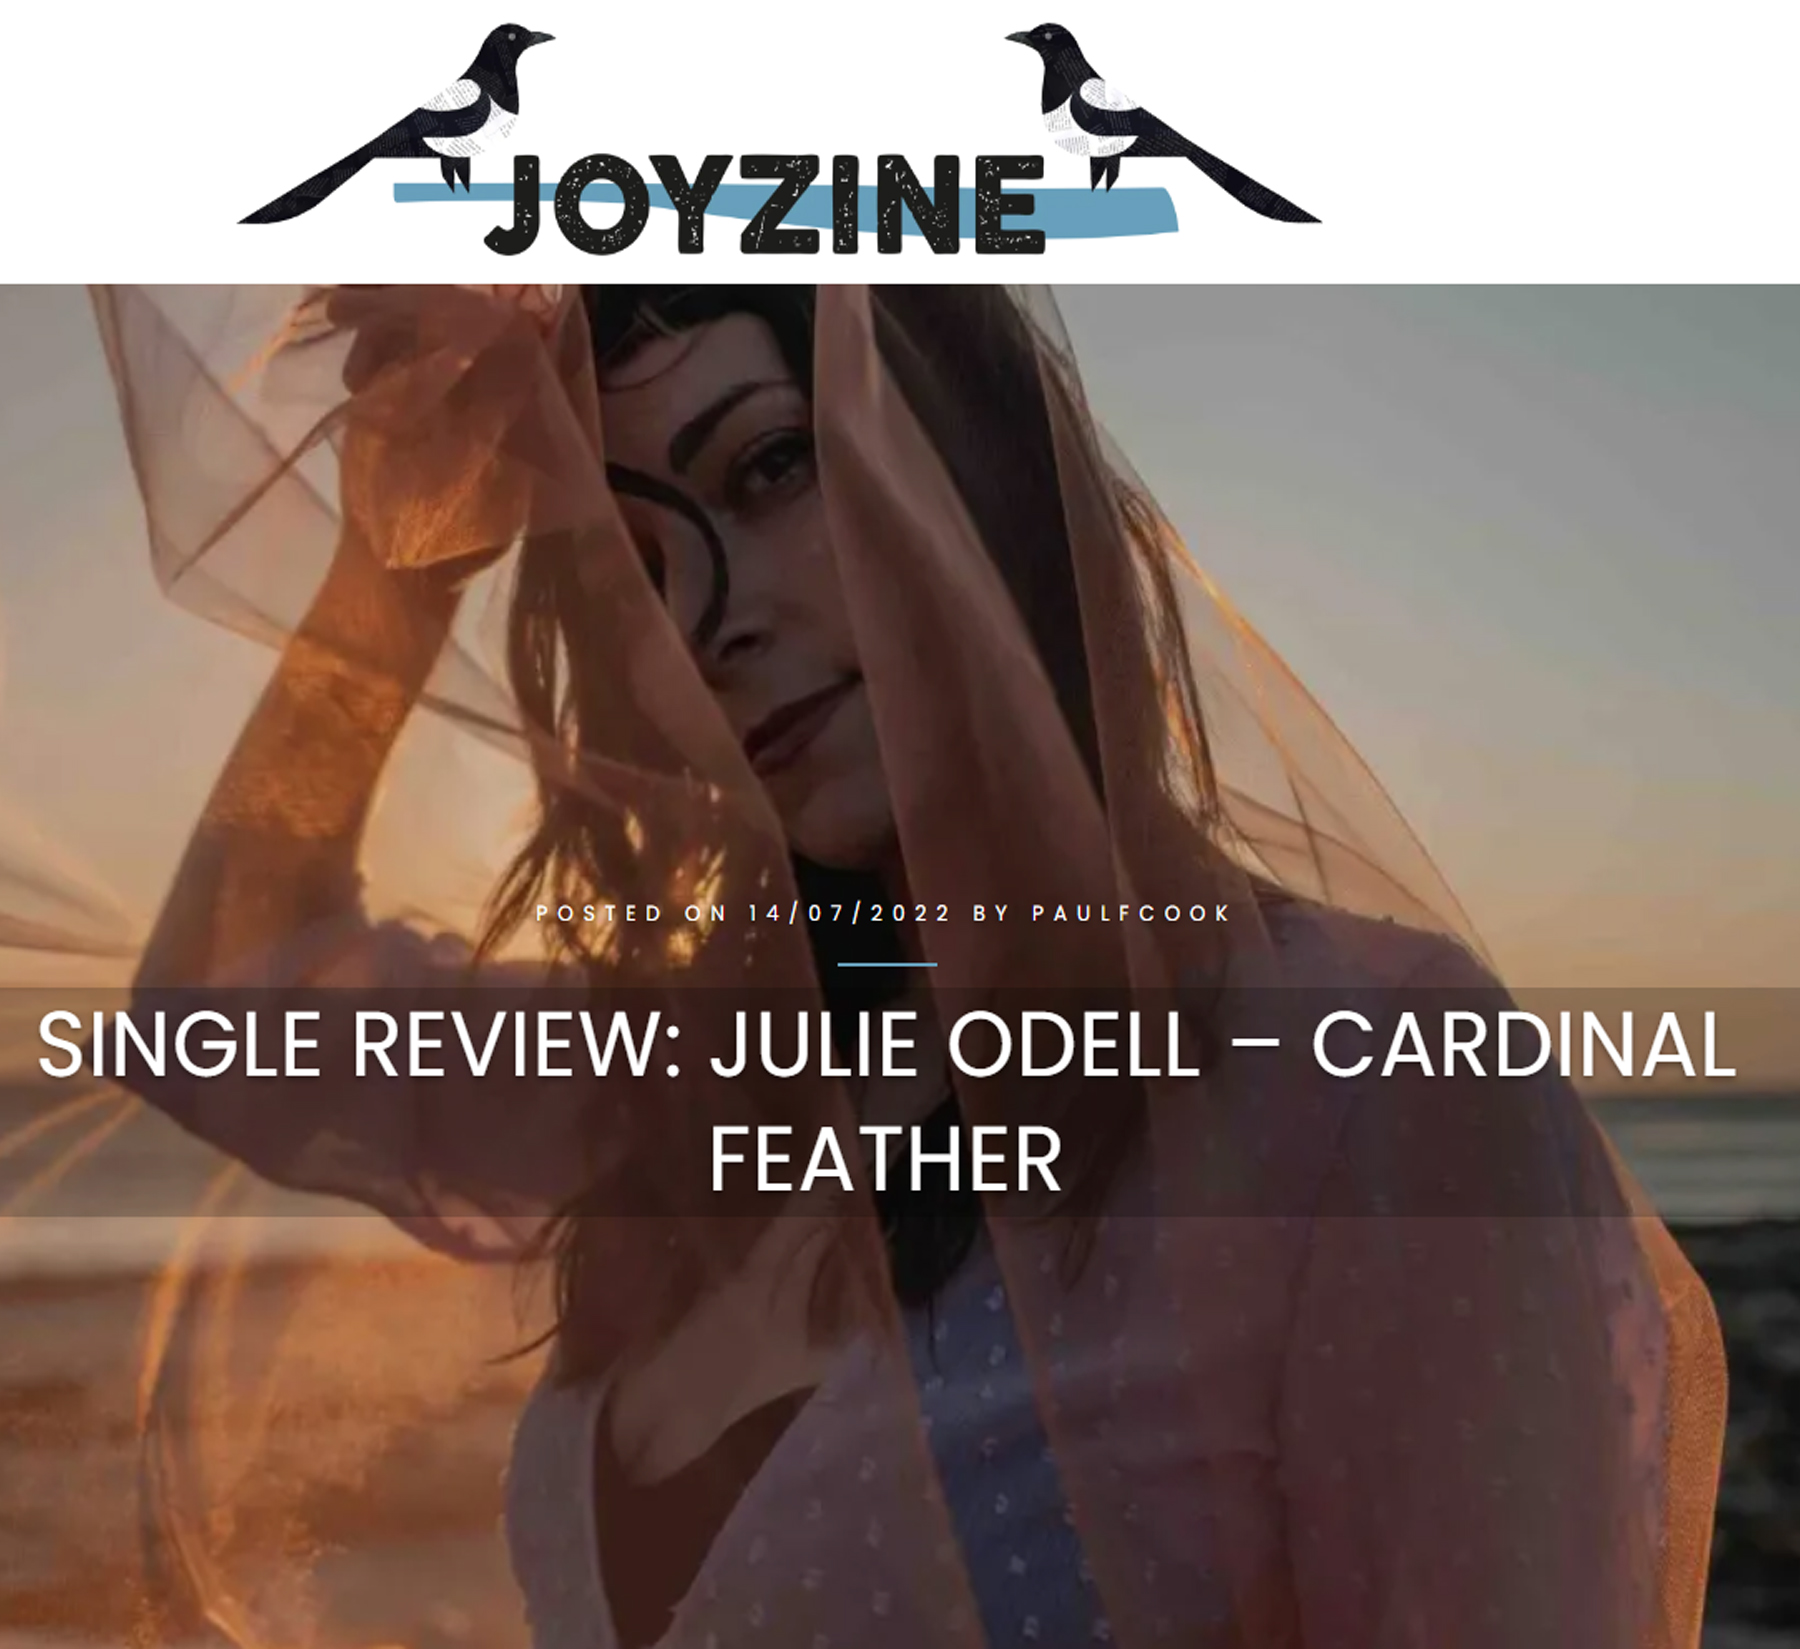 JULIE ODELL – CARDINAL FEATHER